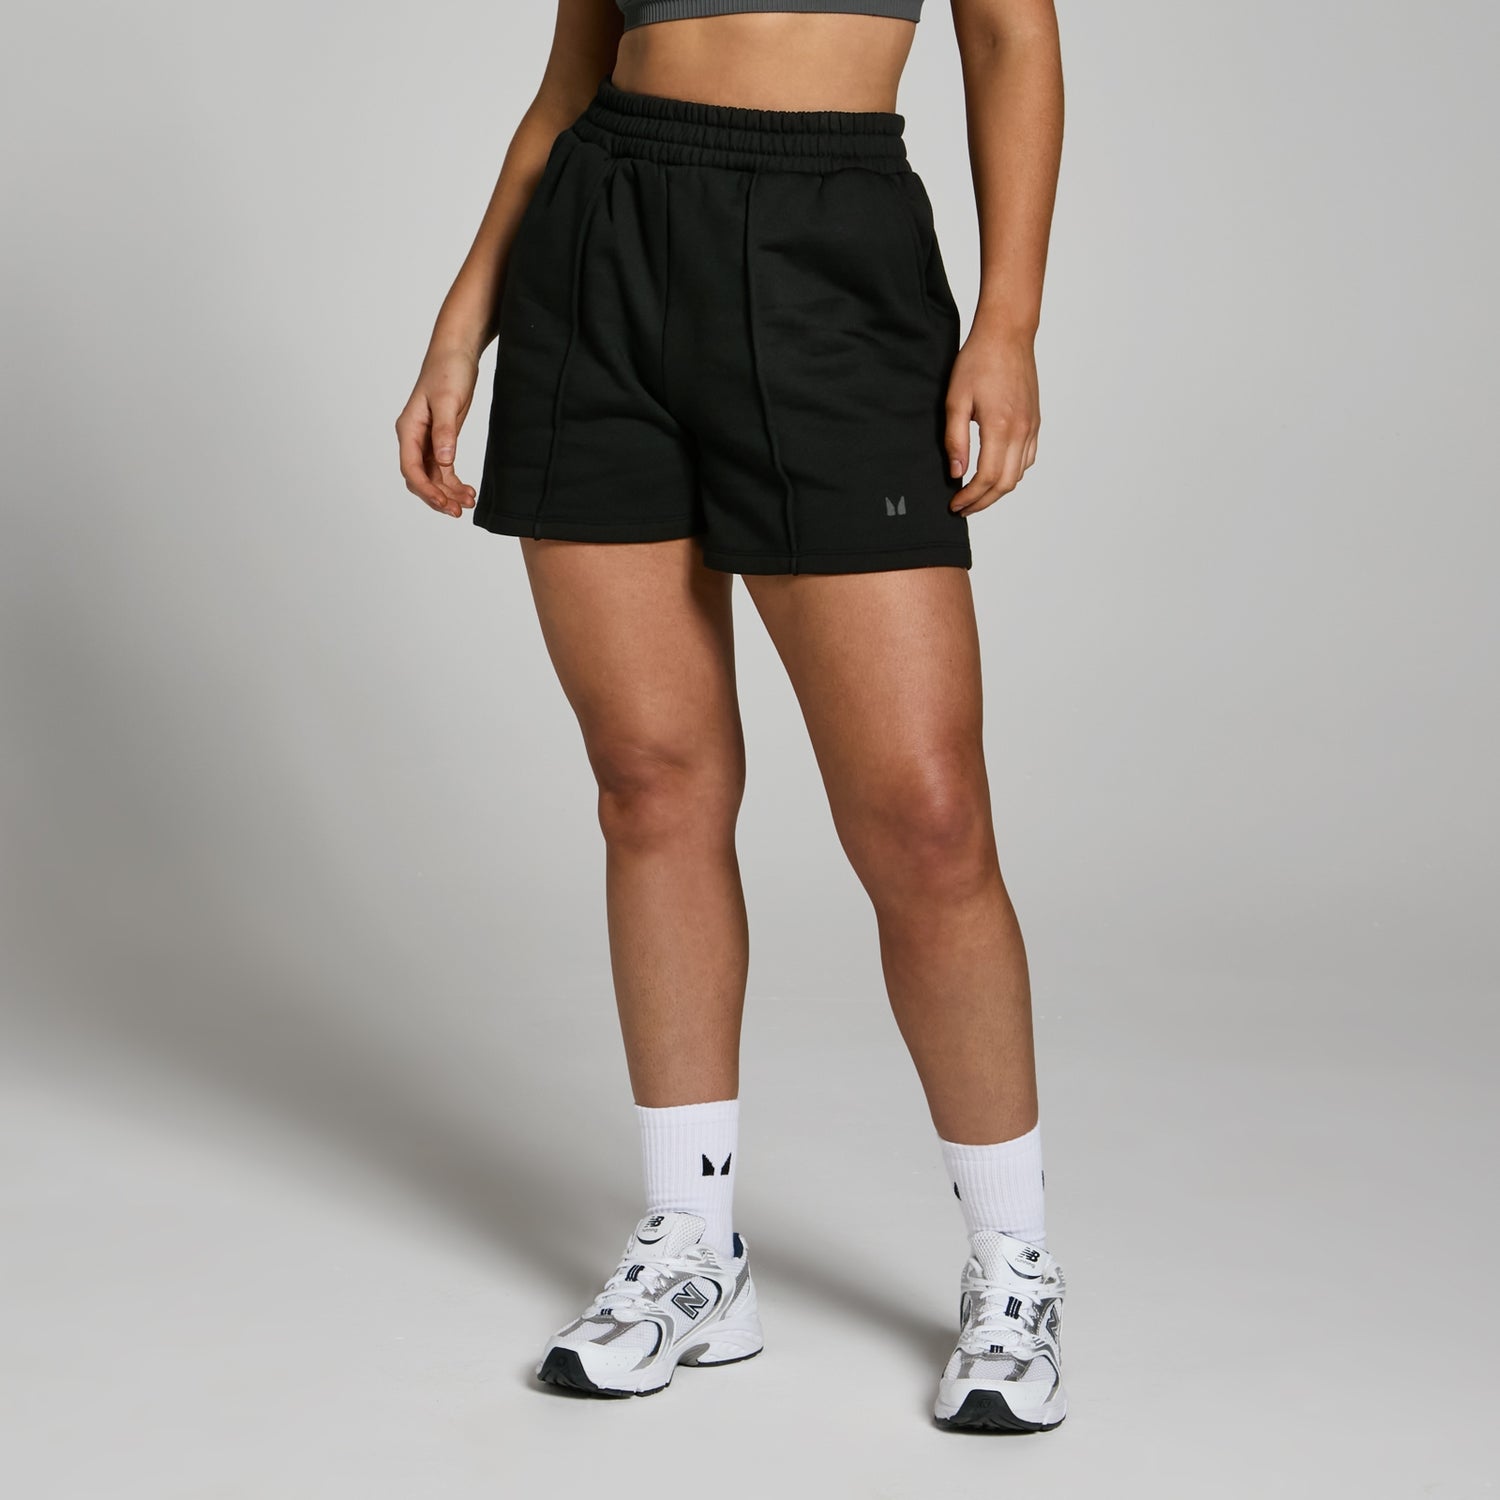 MP Lifestyle Heavyweight Sweat Shorts til kvinder – Sort  - XS